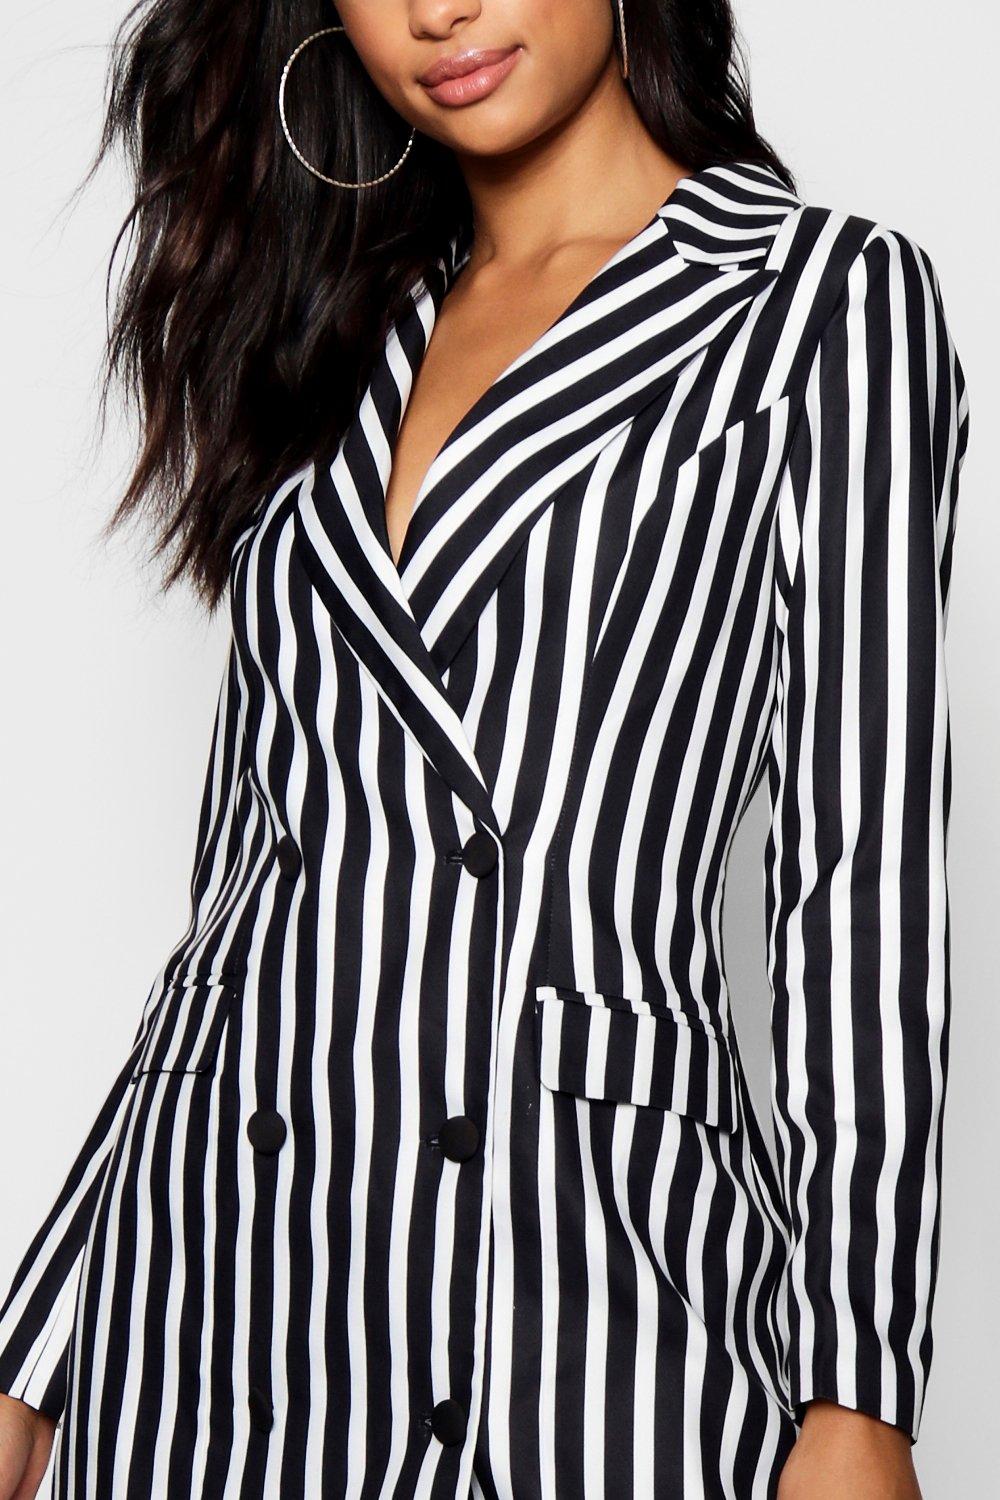 black and white striped blazer dress